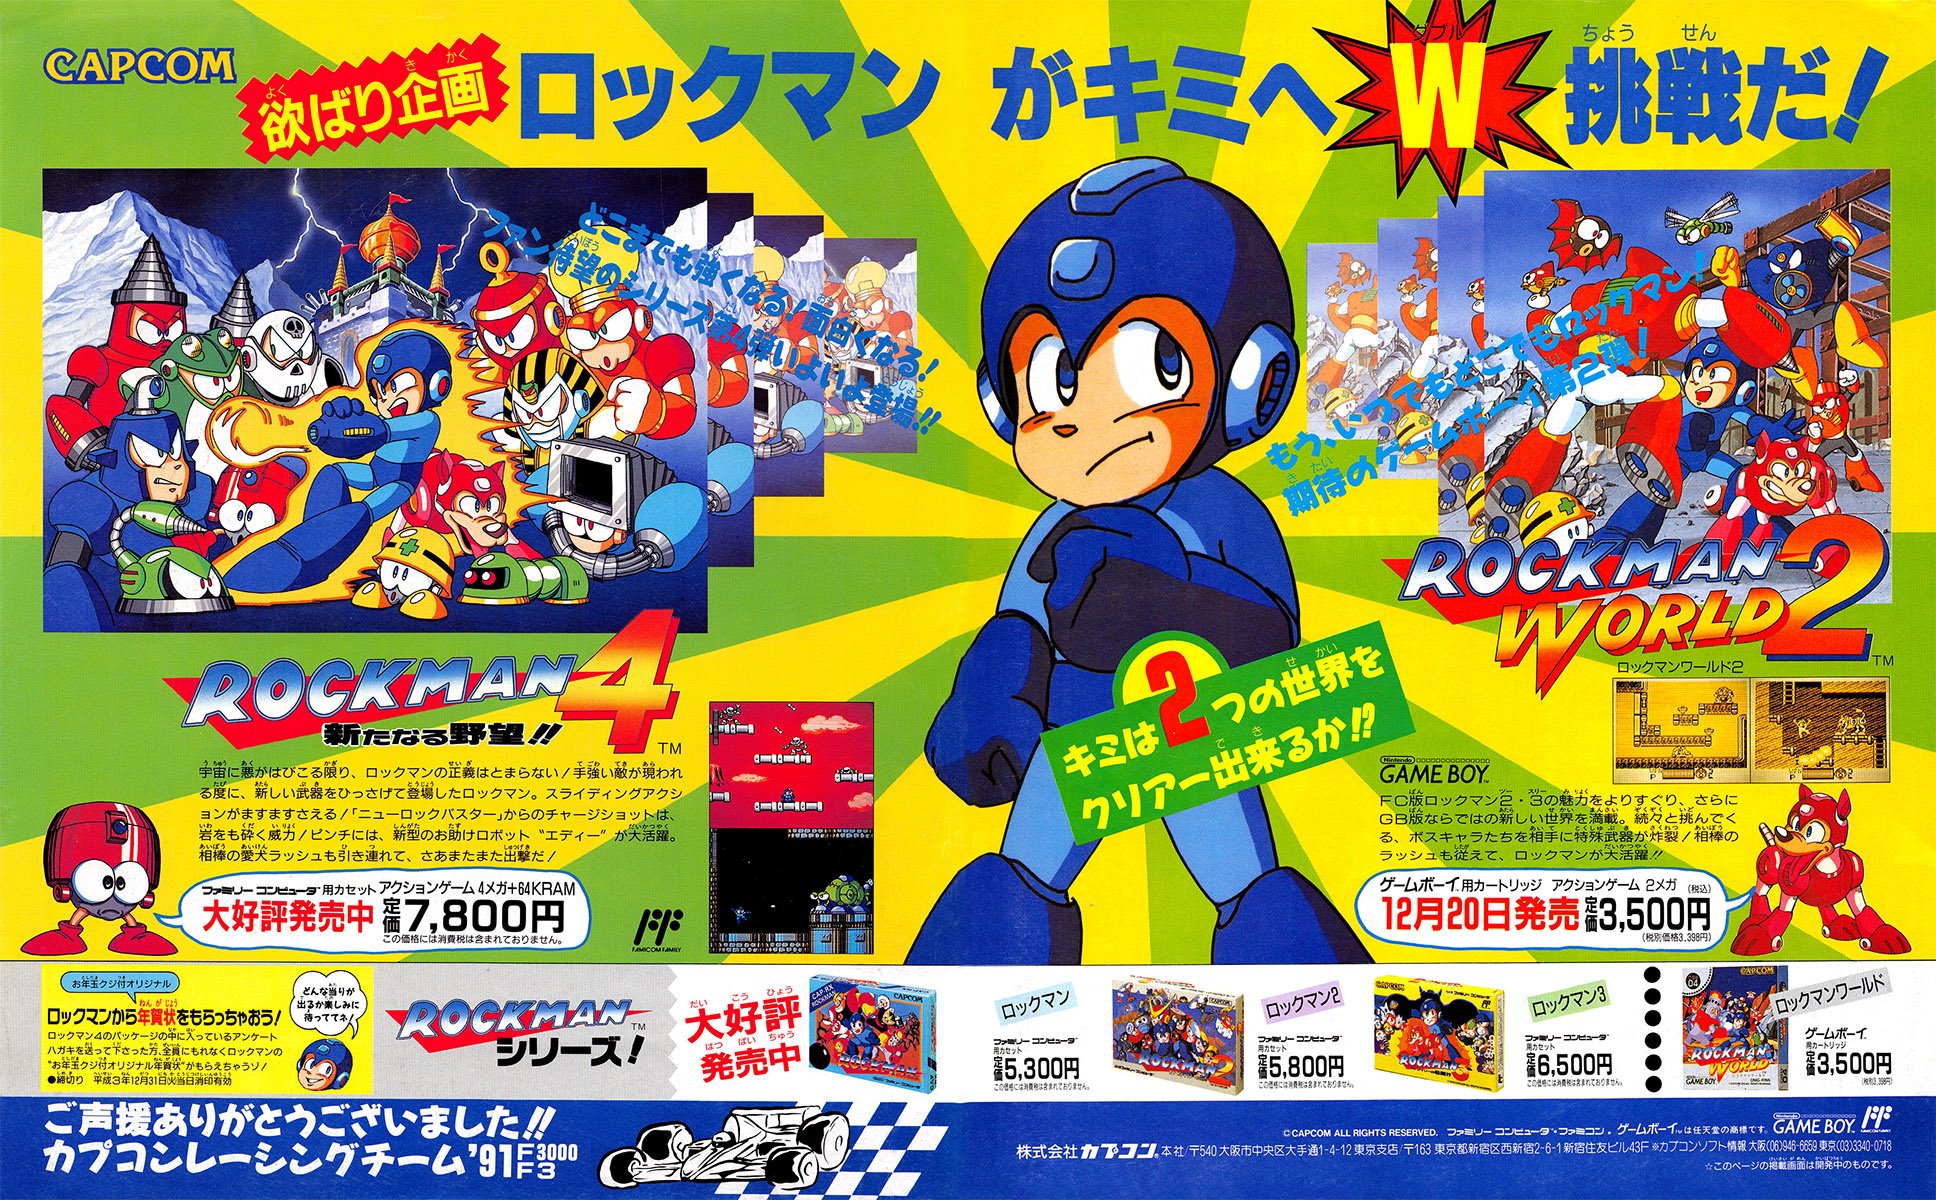 Mega Man II (Rockman World 2) (Japan)